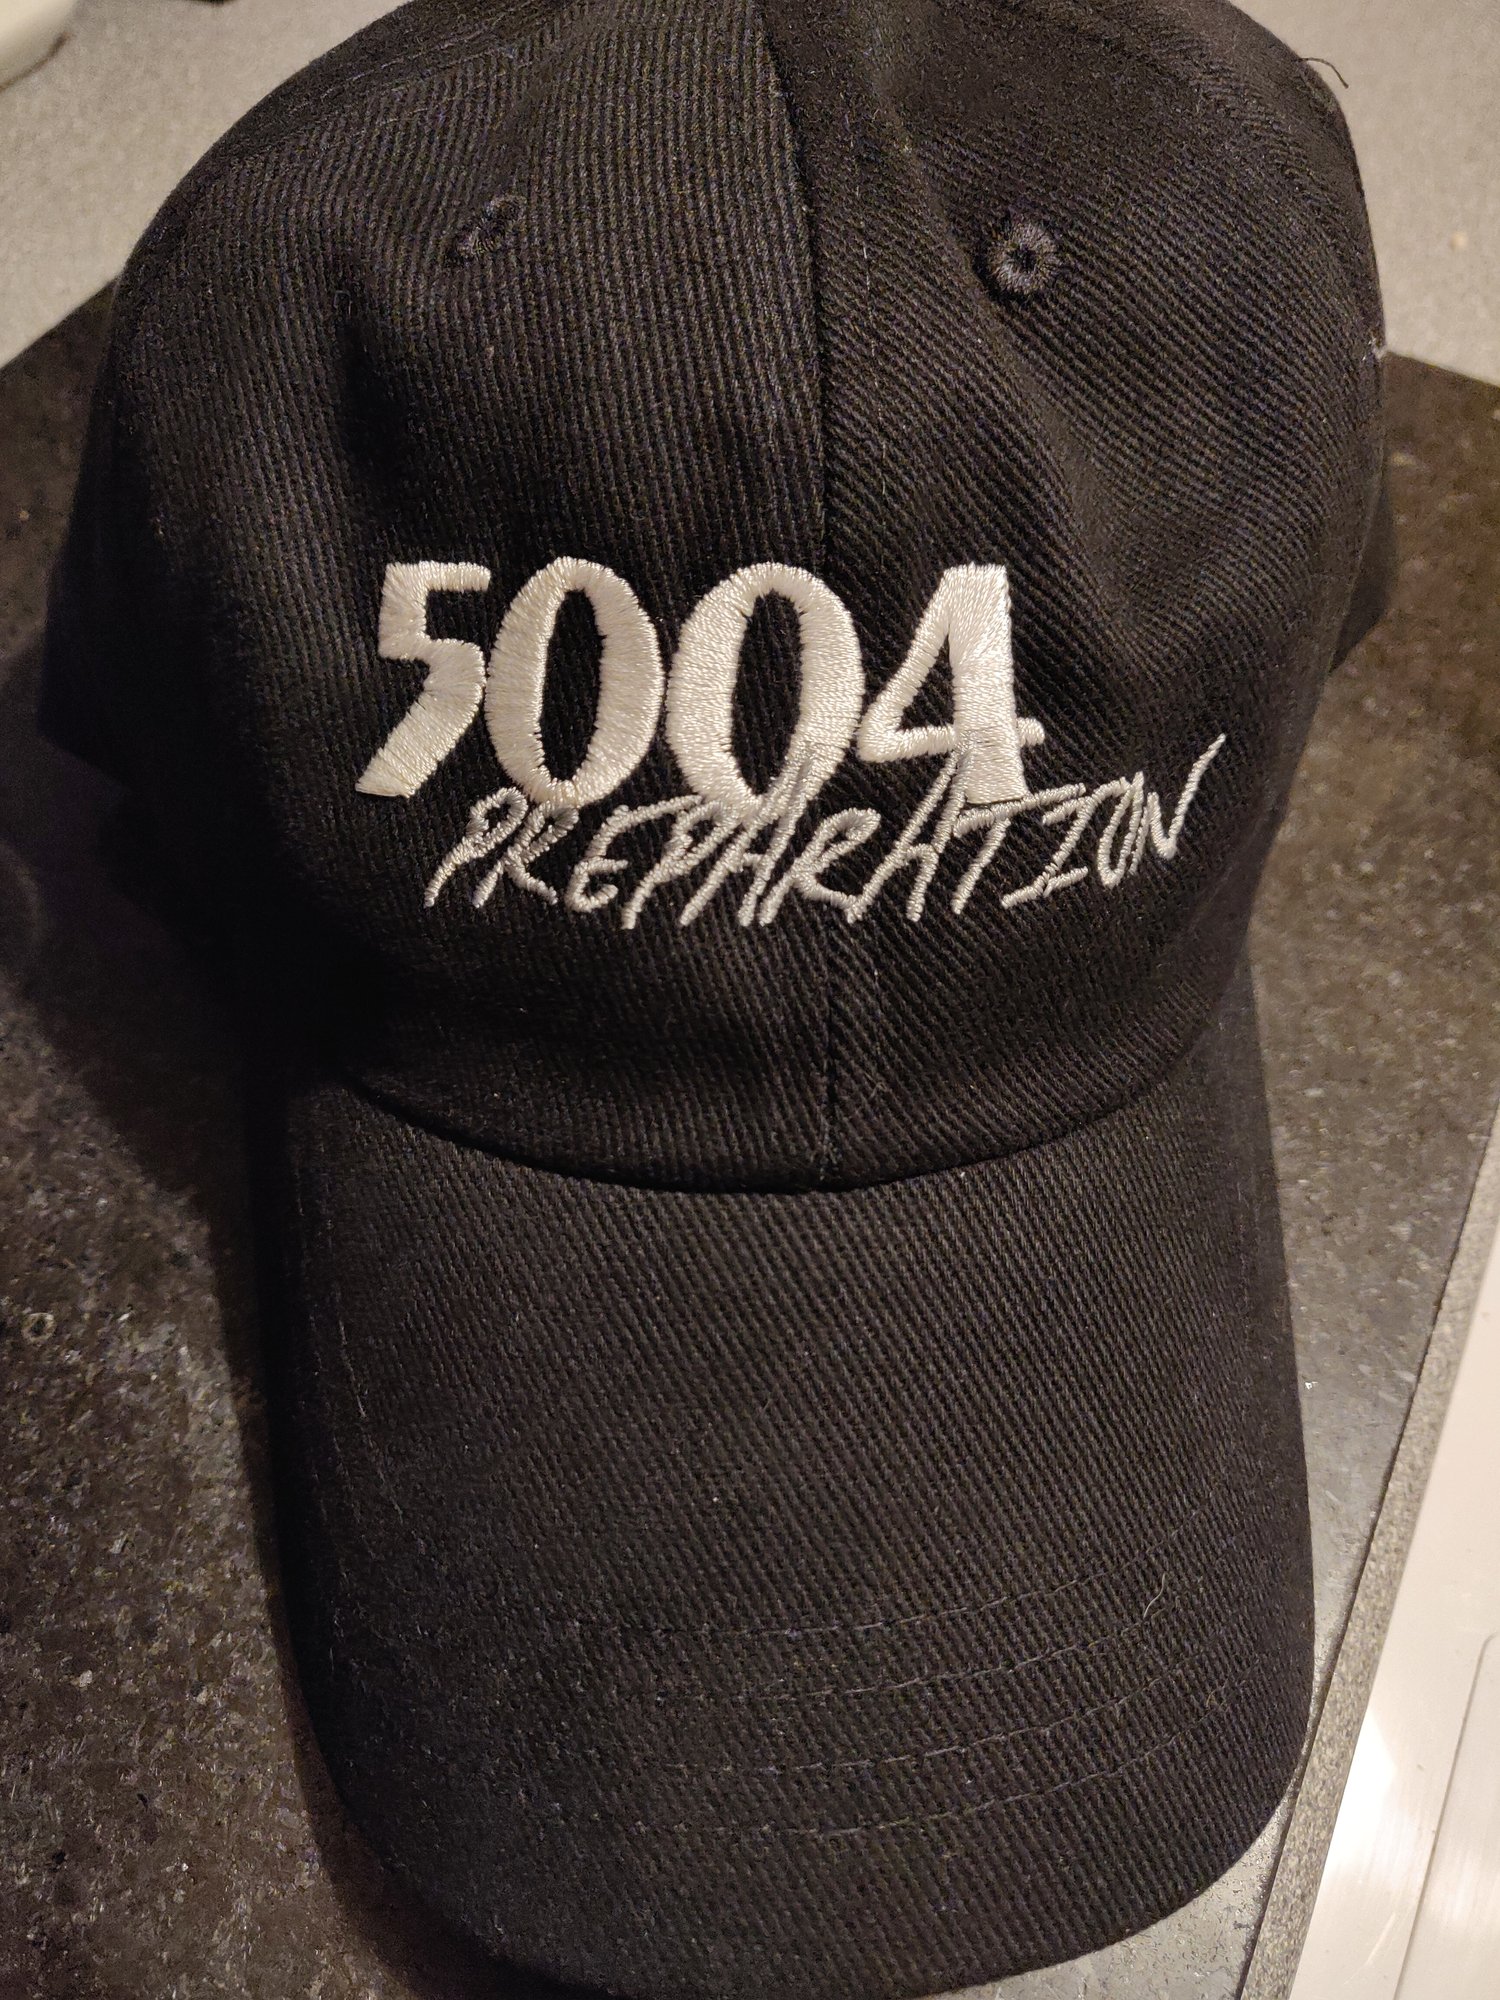 Image of 5004 Preparation logo'd Baseball Cap